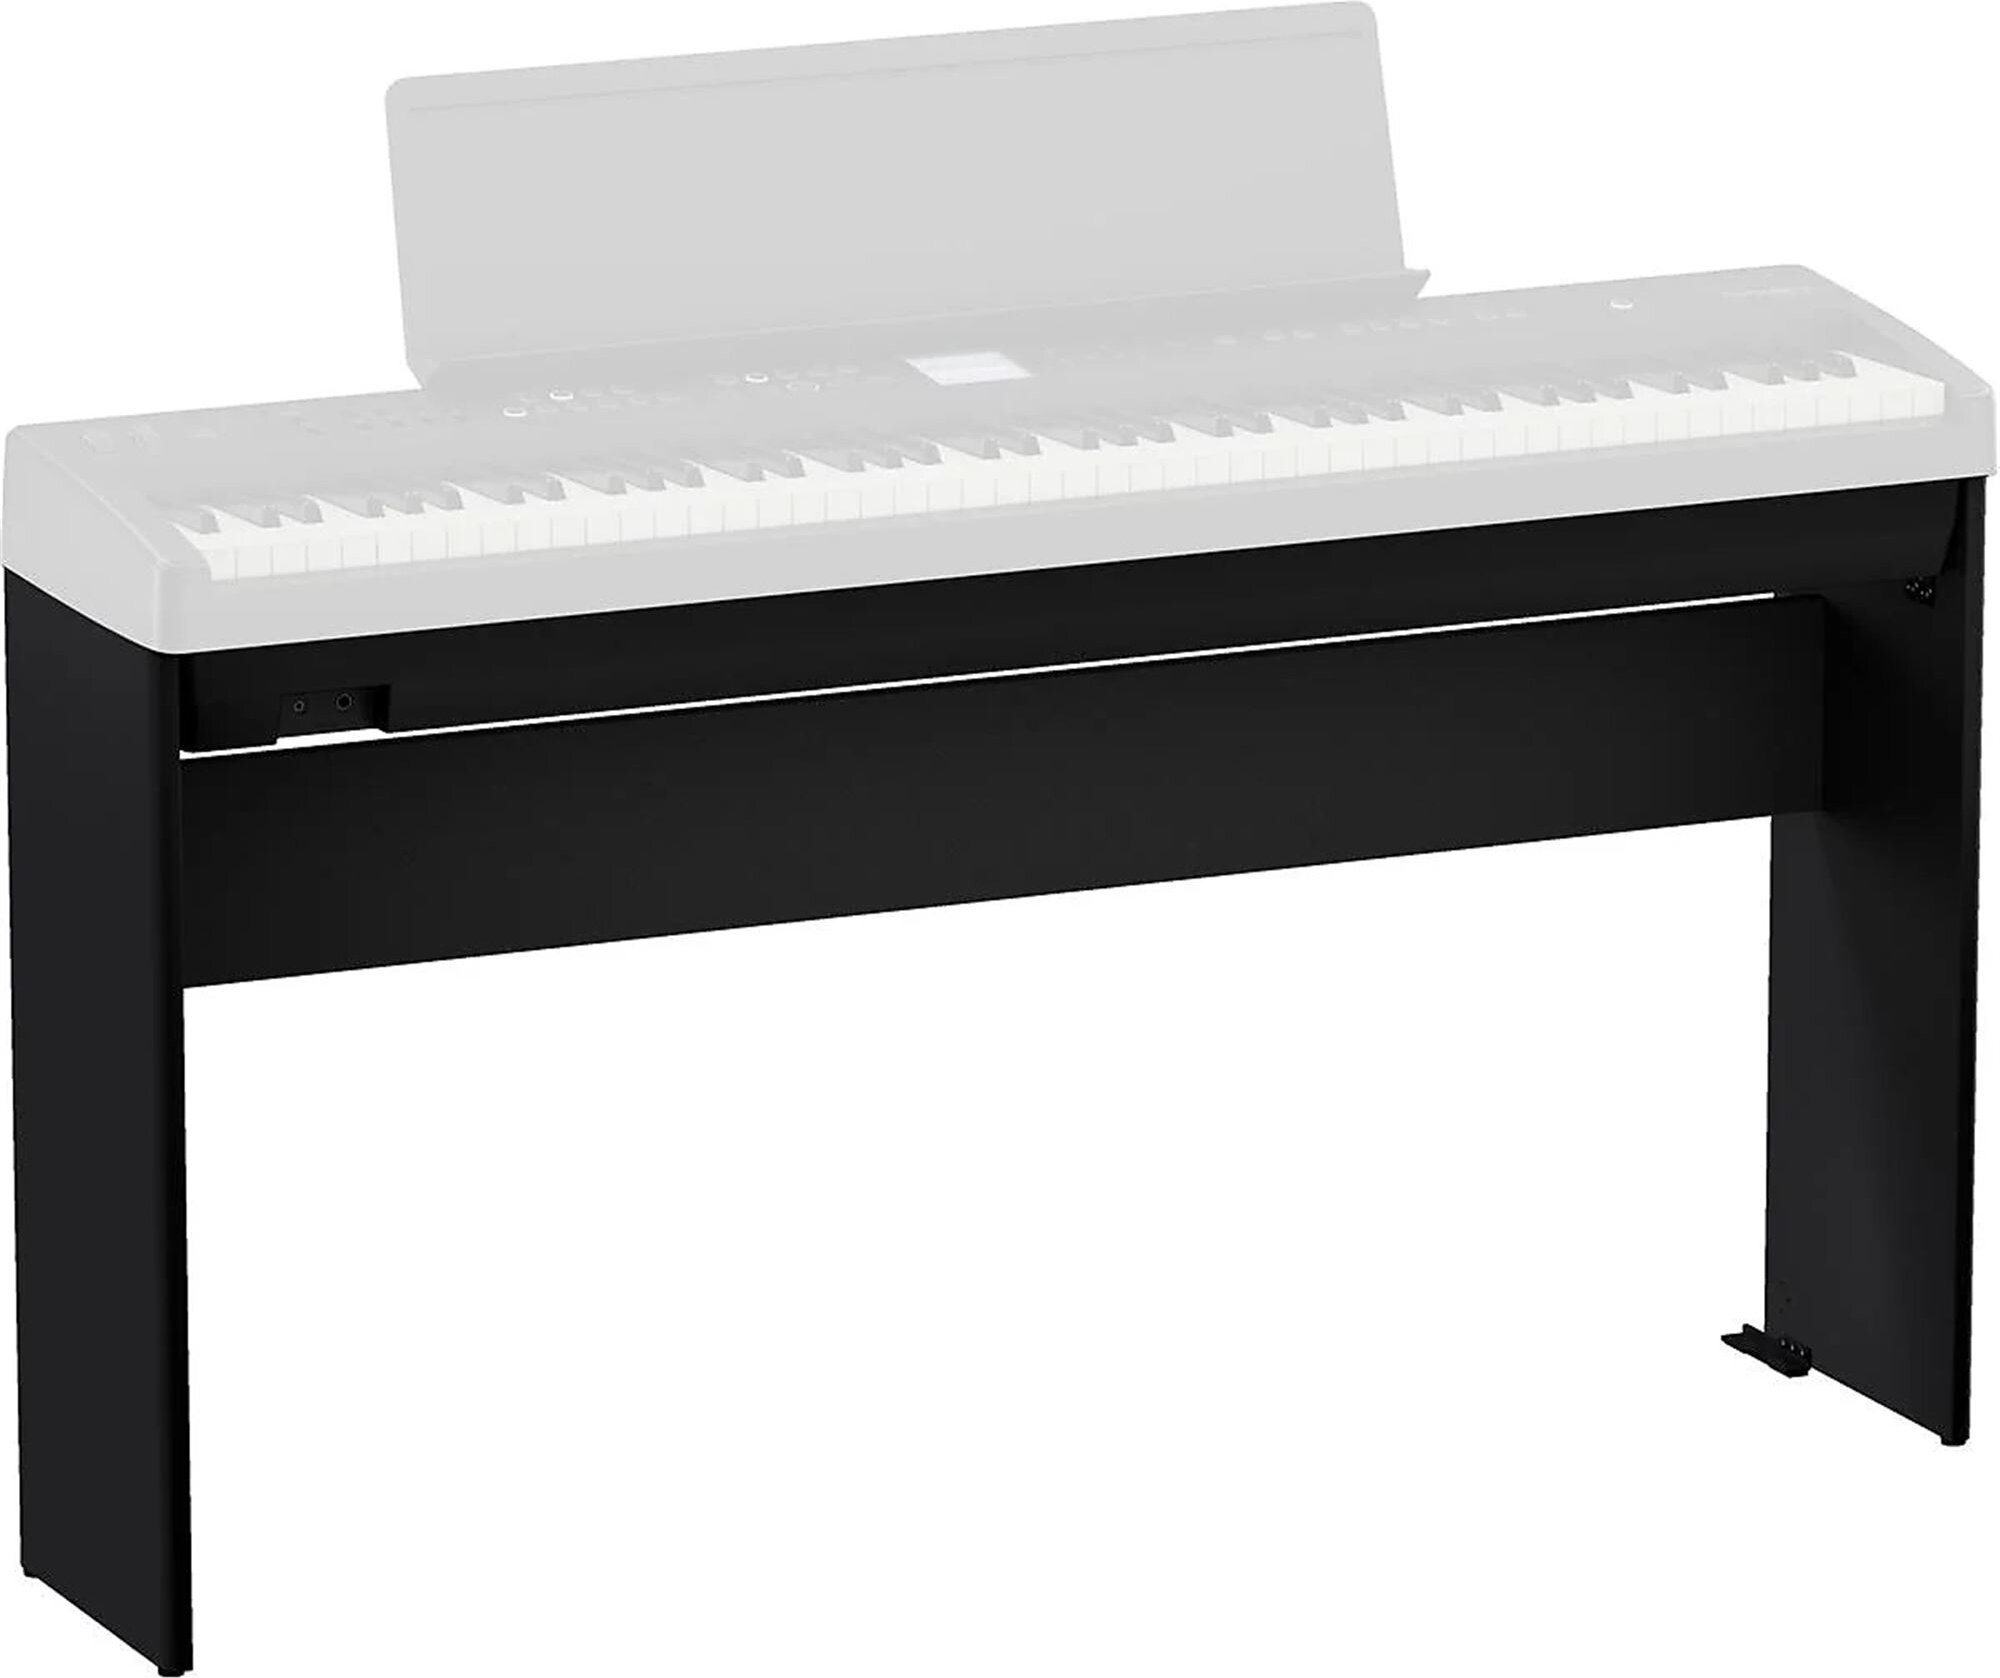 Roland KSFE50BK Stand for FPE50 Digital Piano -  KSFE50-BK